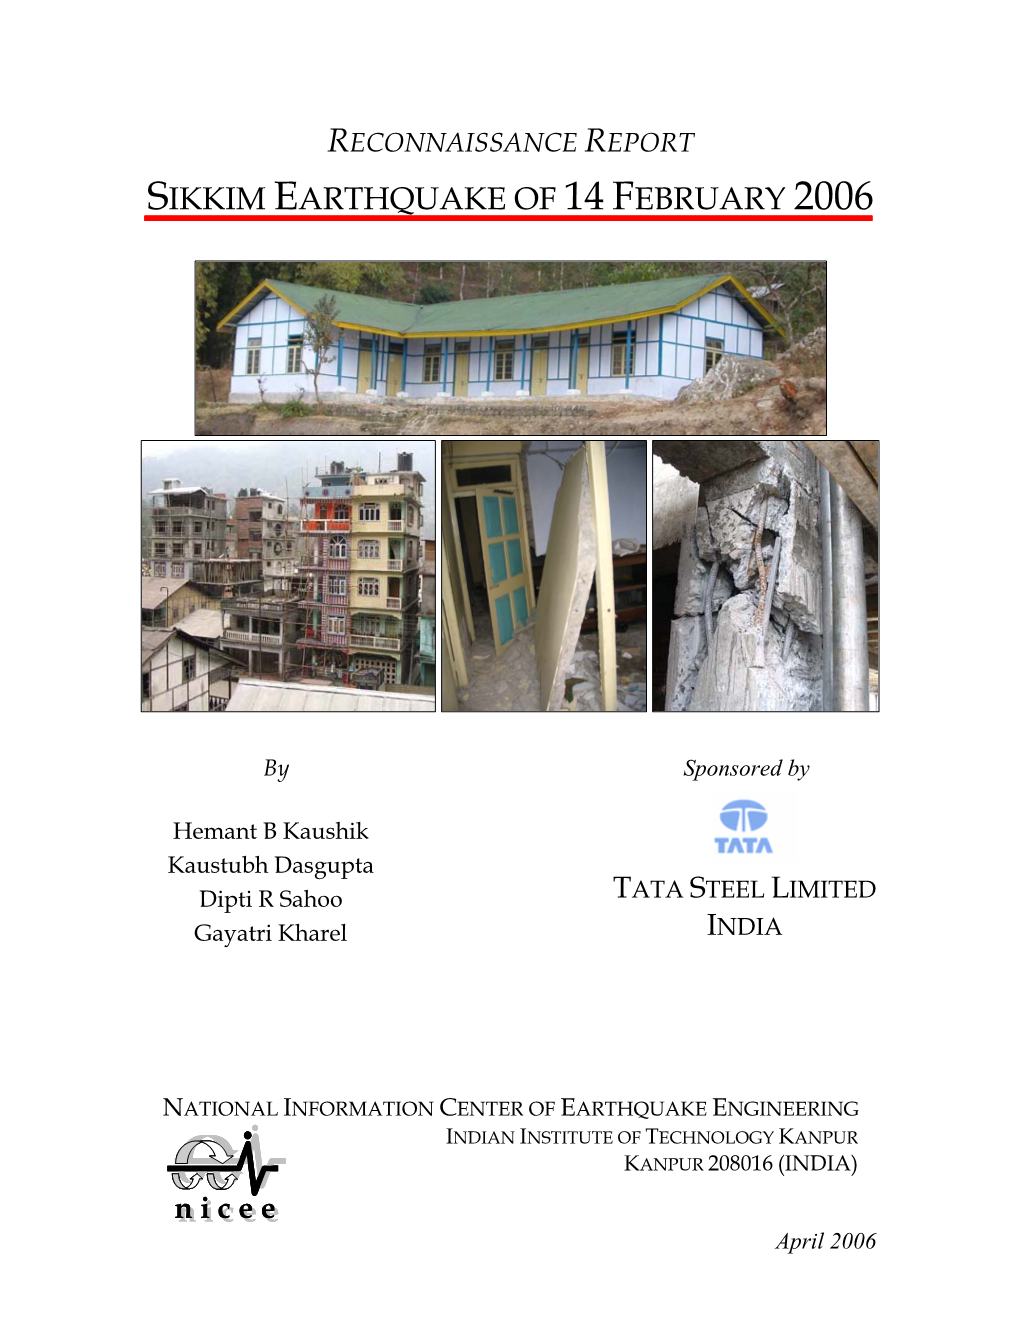 Sikkim Earthquake of 14 February 2006